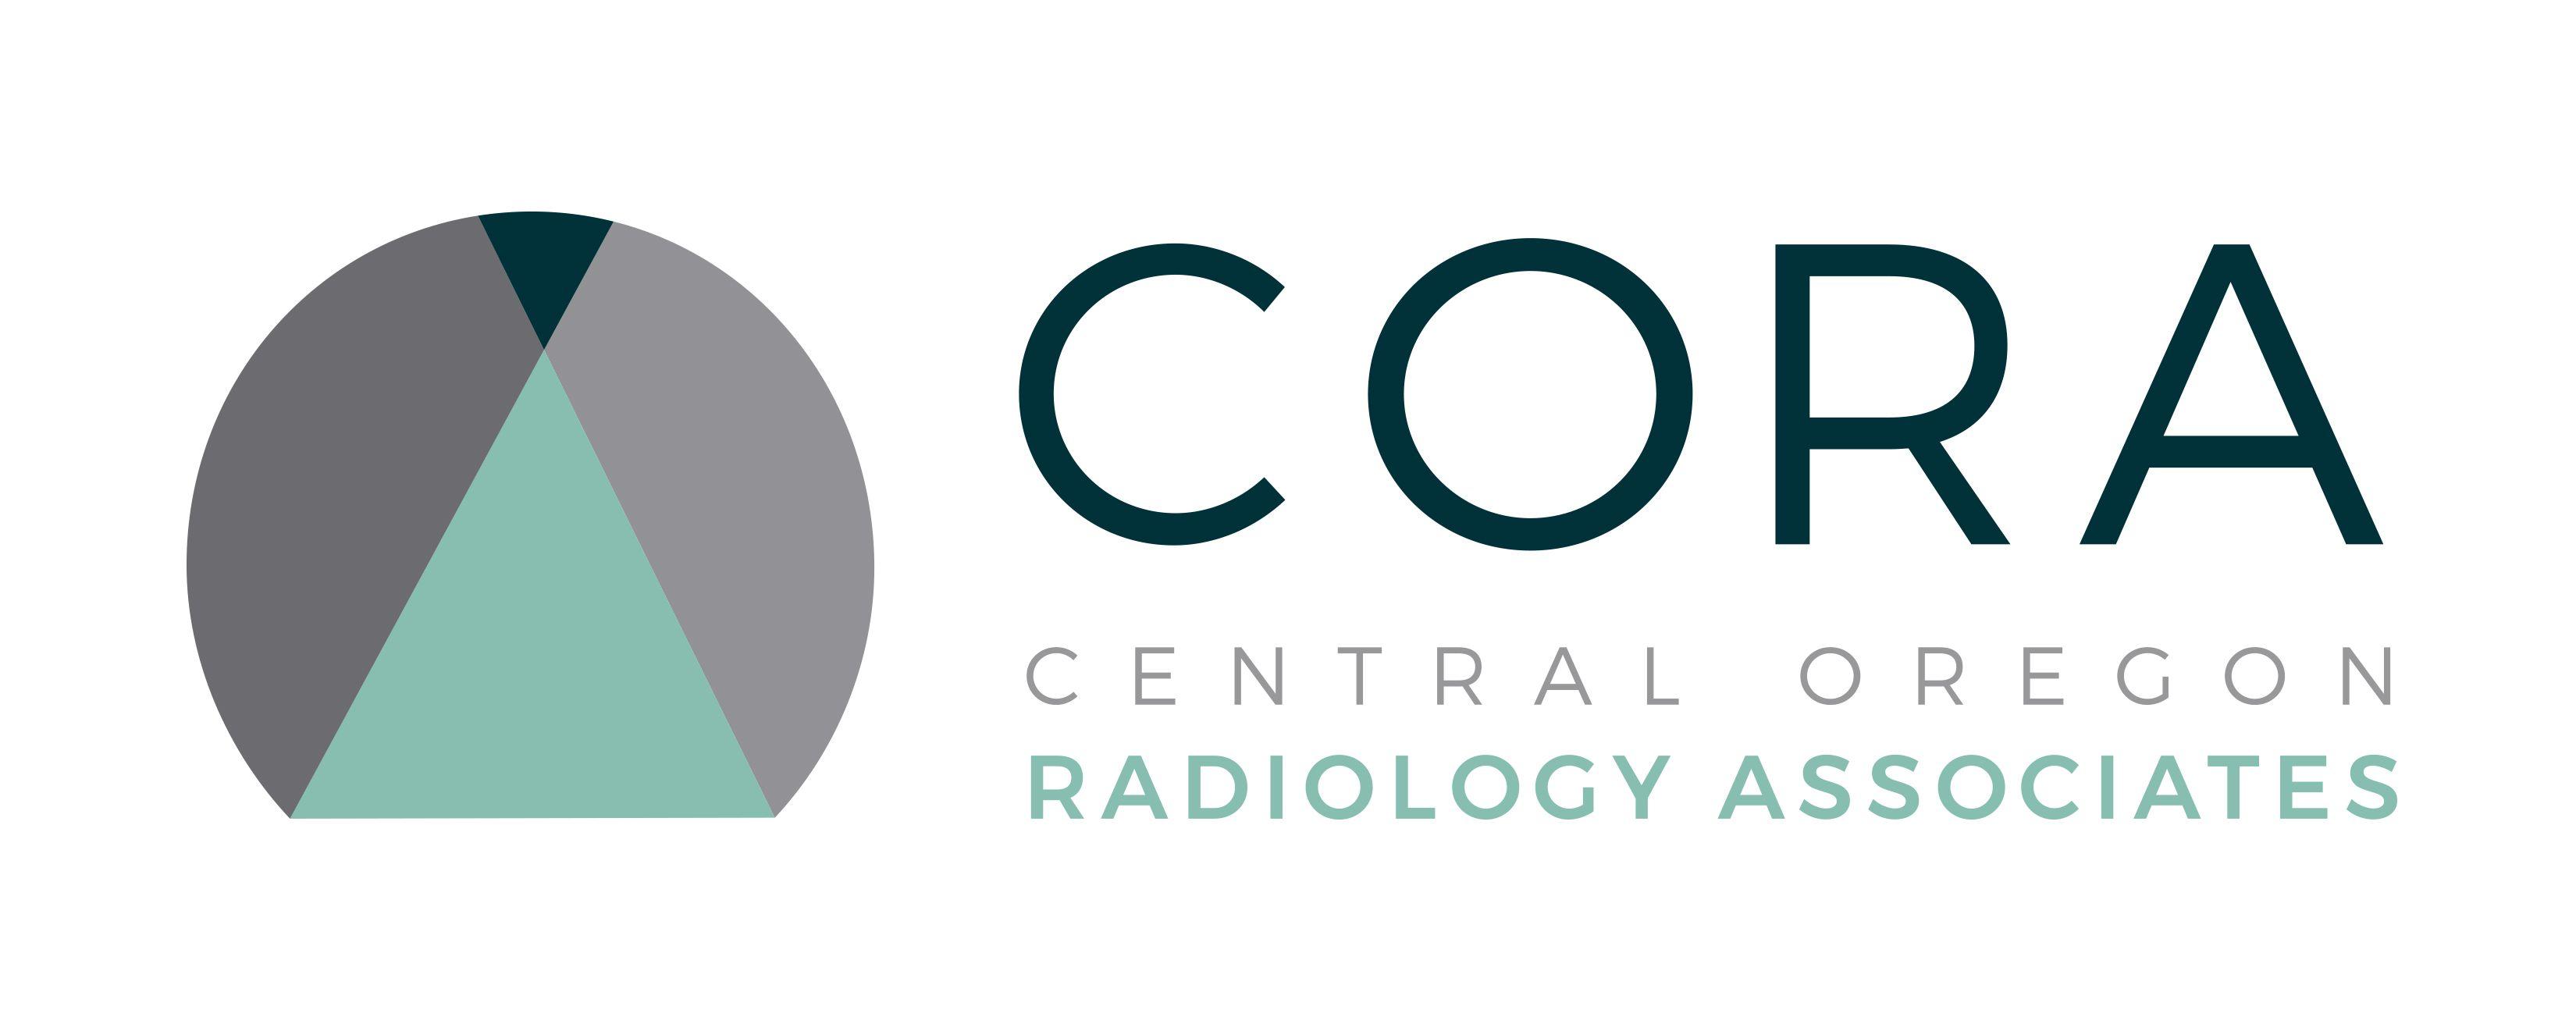 Radiology Logo - CORA Horizontal Logo. Central Oregon Radiology Associates